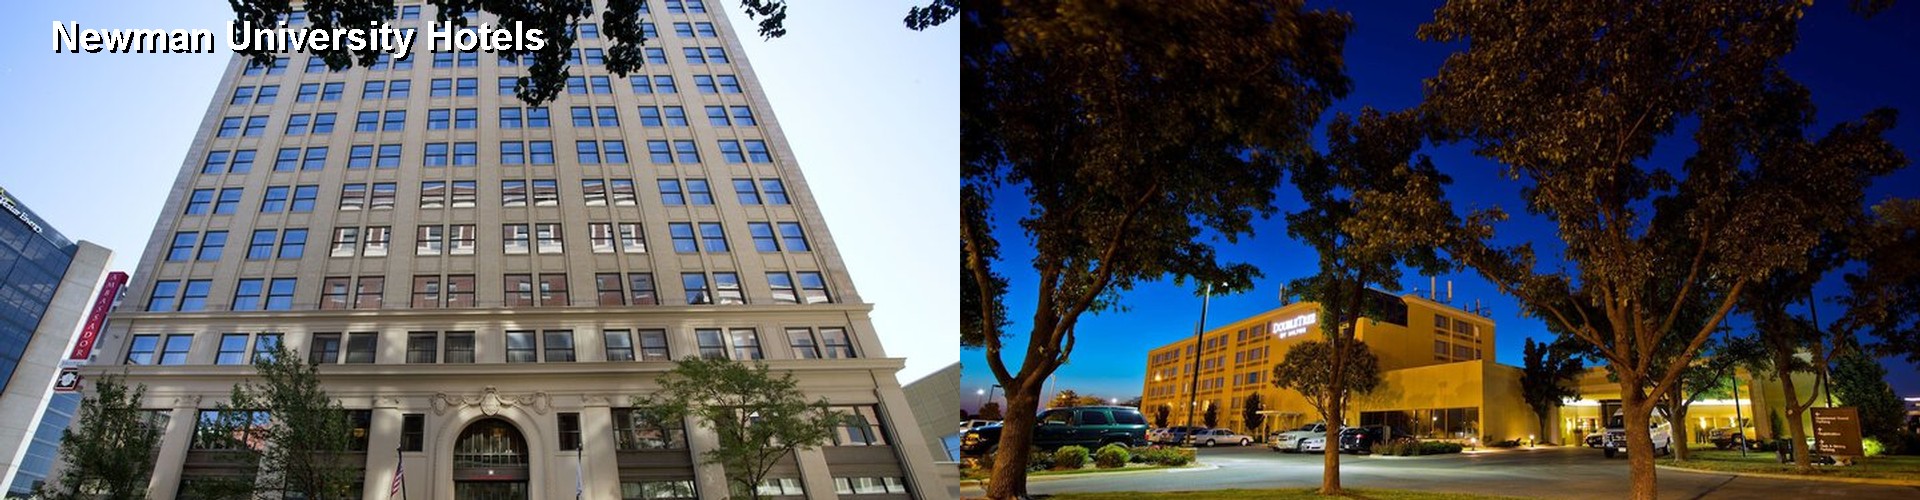 4 Best Hotels near Newman University